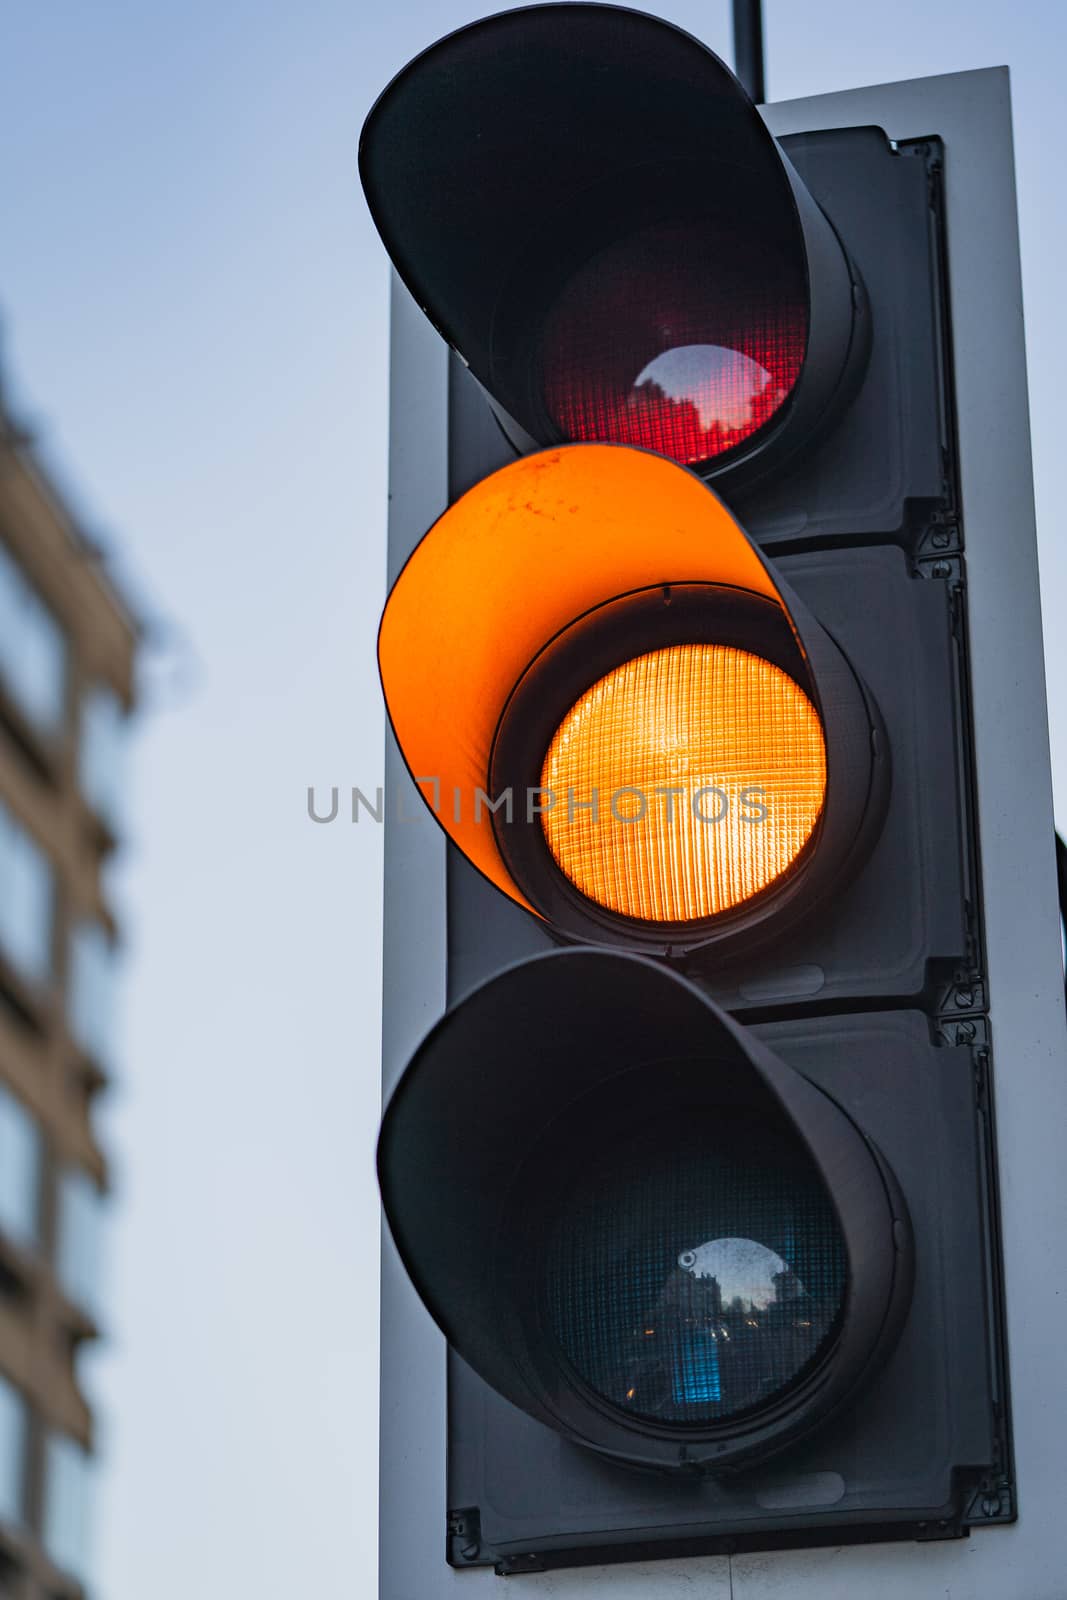 A Close-up of a UK Traffic Light